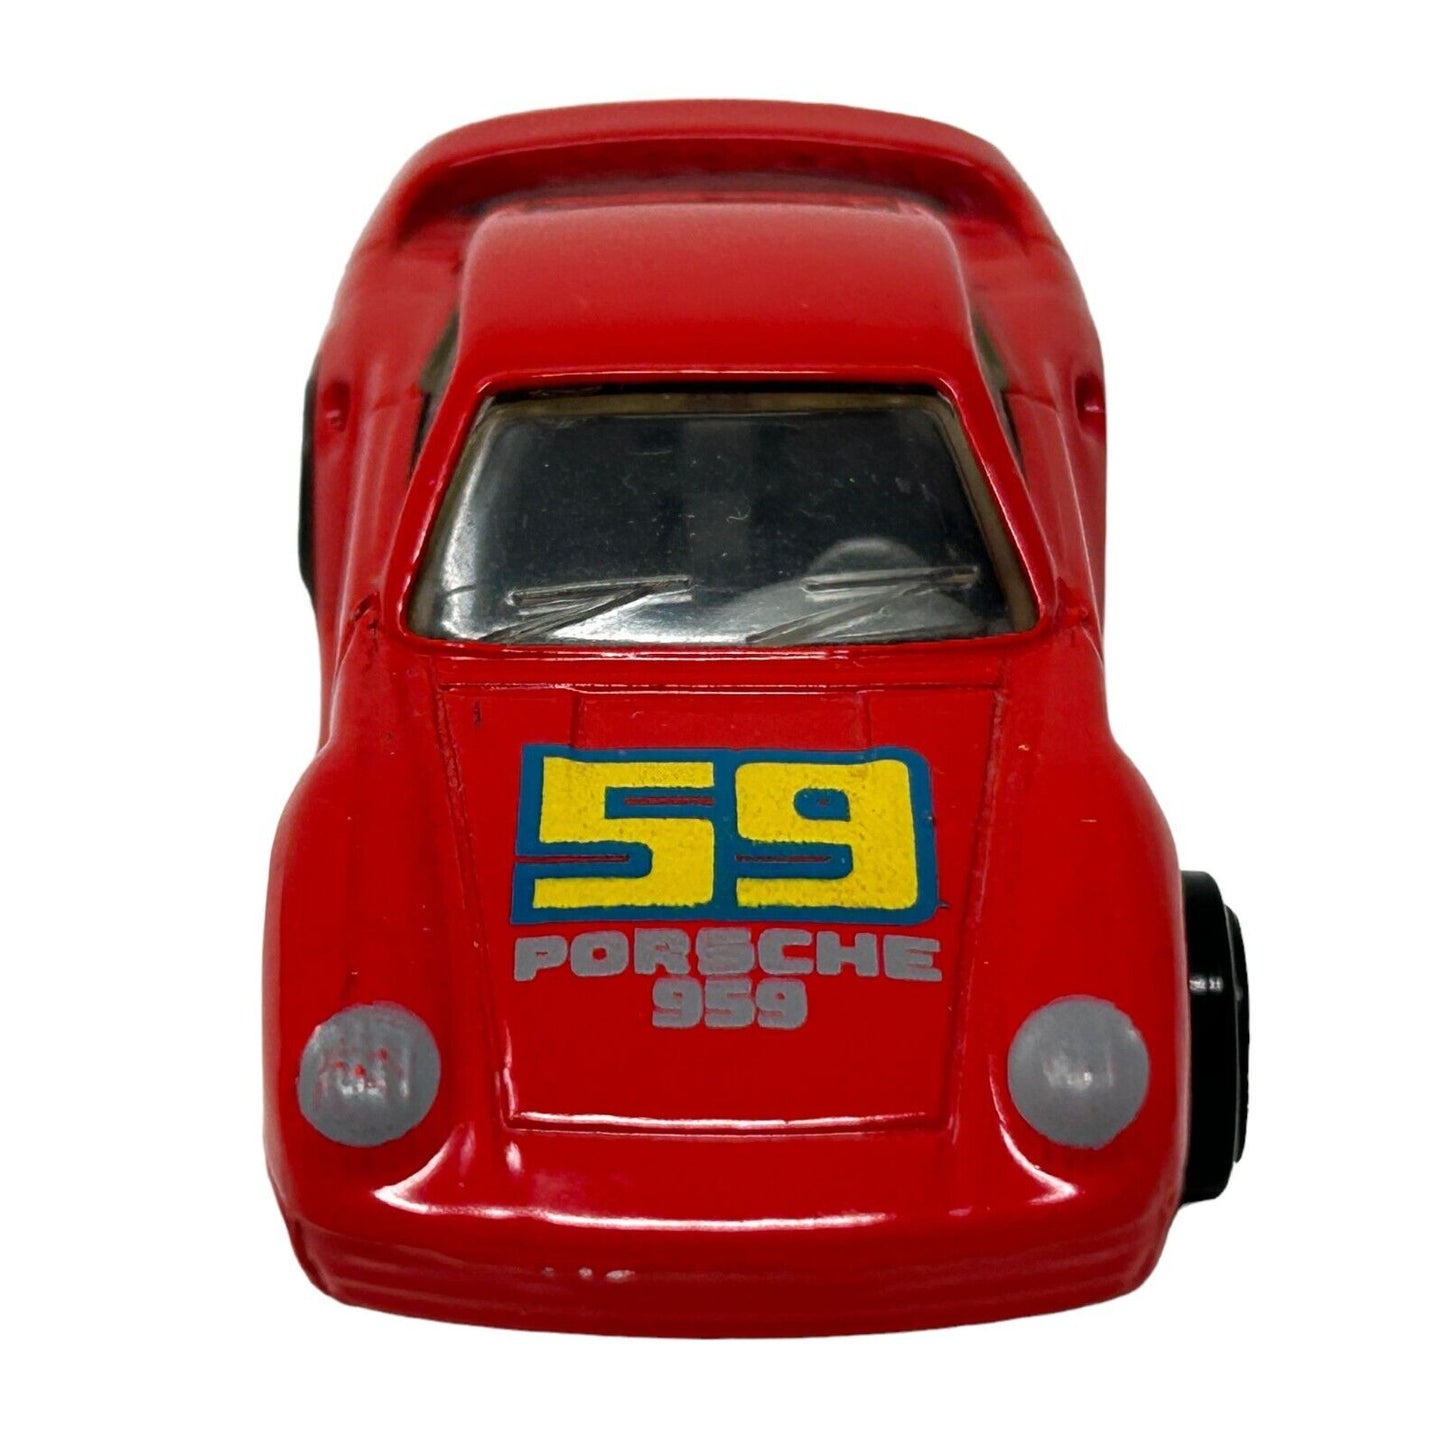 Porsche 959 Hot Wheels Collectible Diecast Car Red Toy Vehicle Vintage 90s